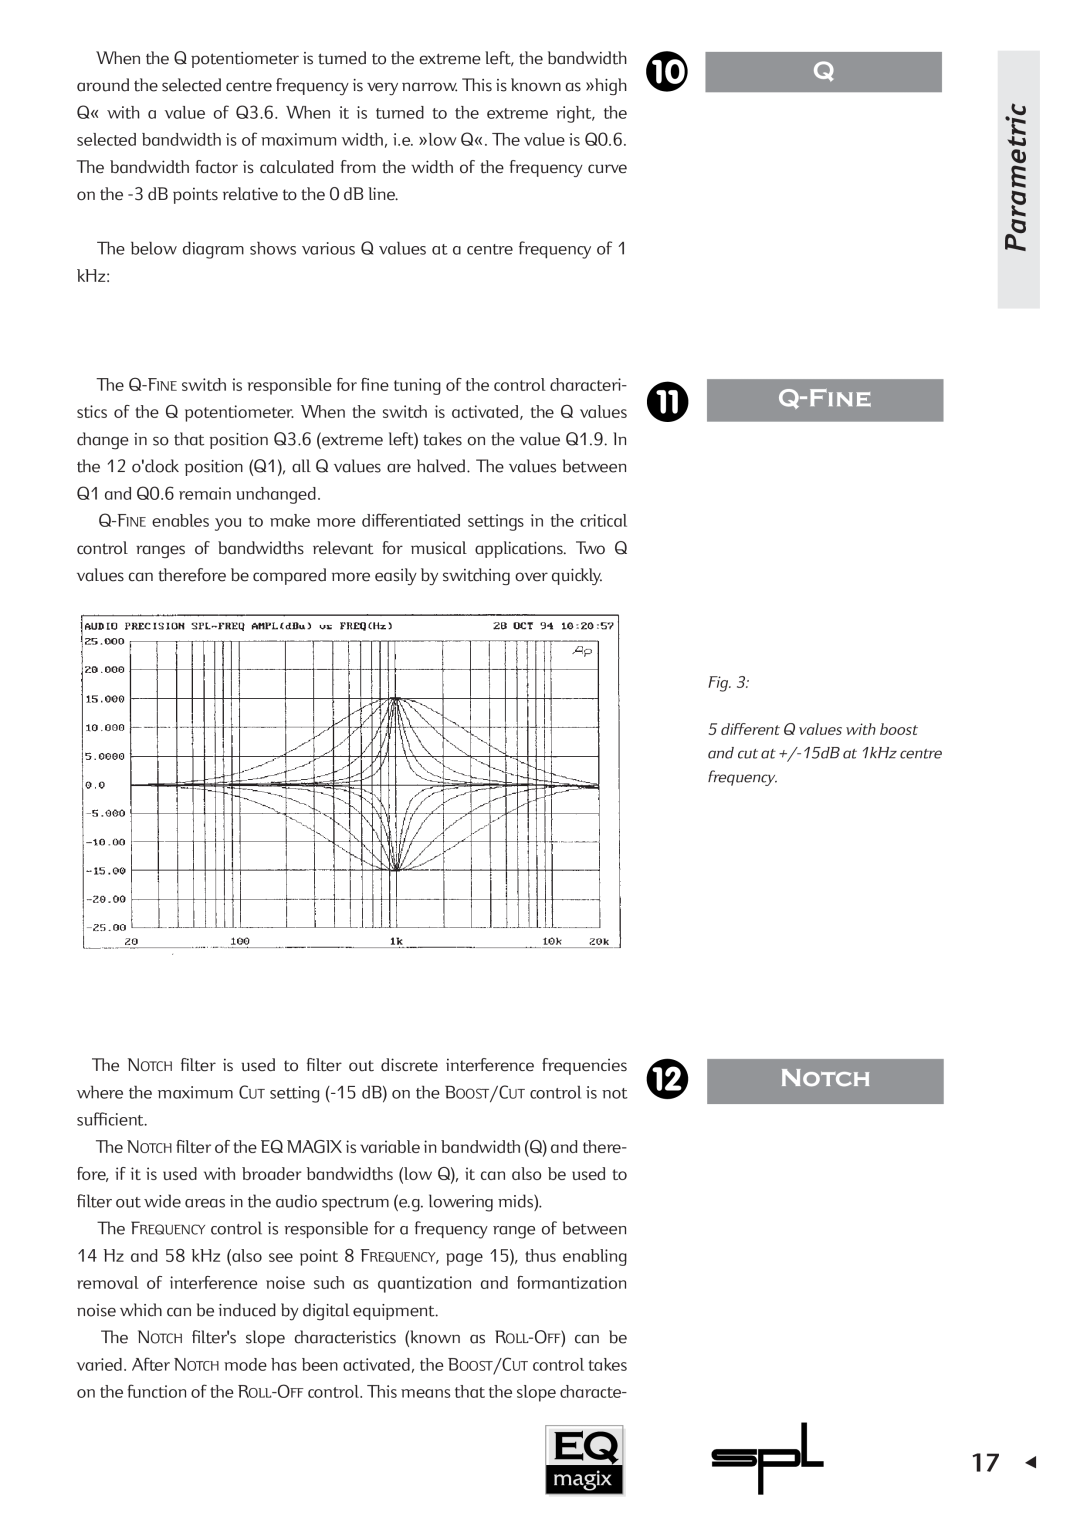 Sound Performance Lab EQ MAGIX manual Notch, Parametric 